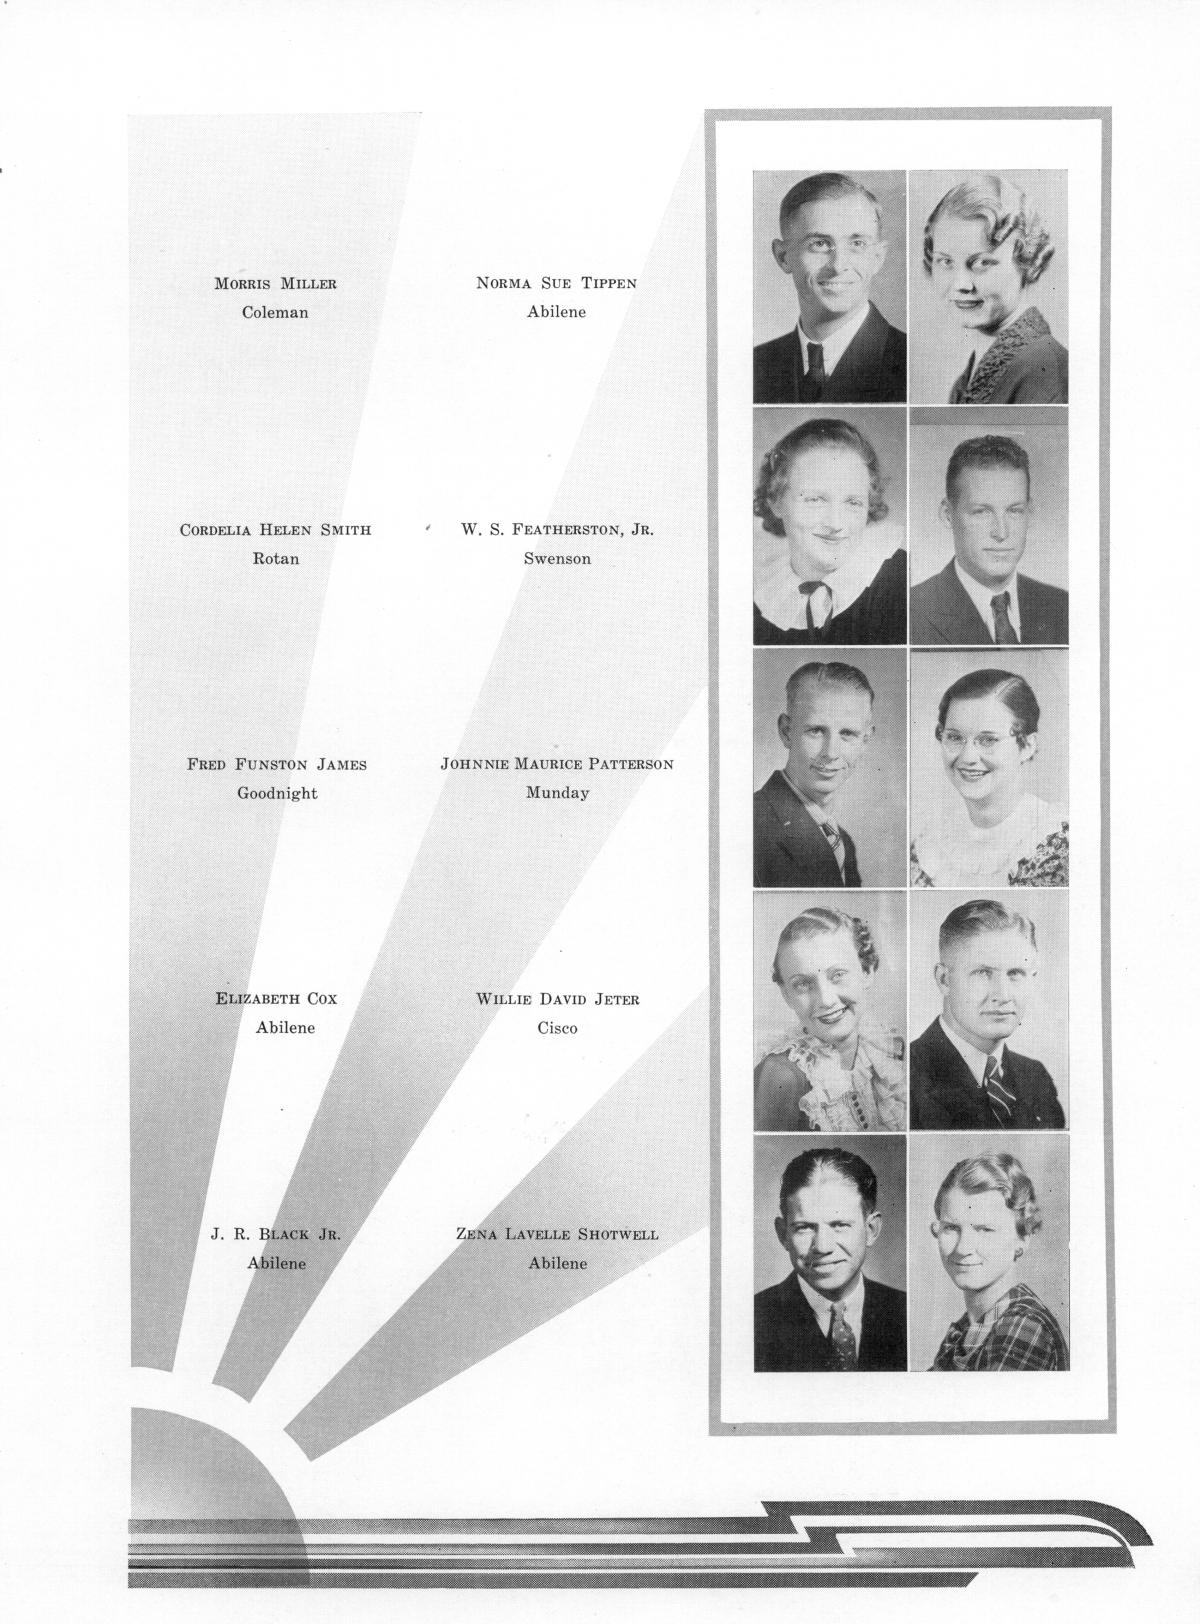 The Bronco, Yearbook of Hardin-Simmons University, 1936
                                                
                                                    48
                                                